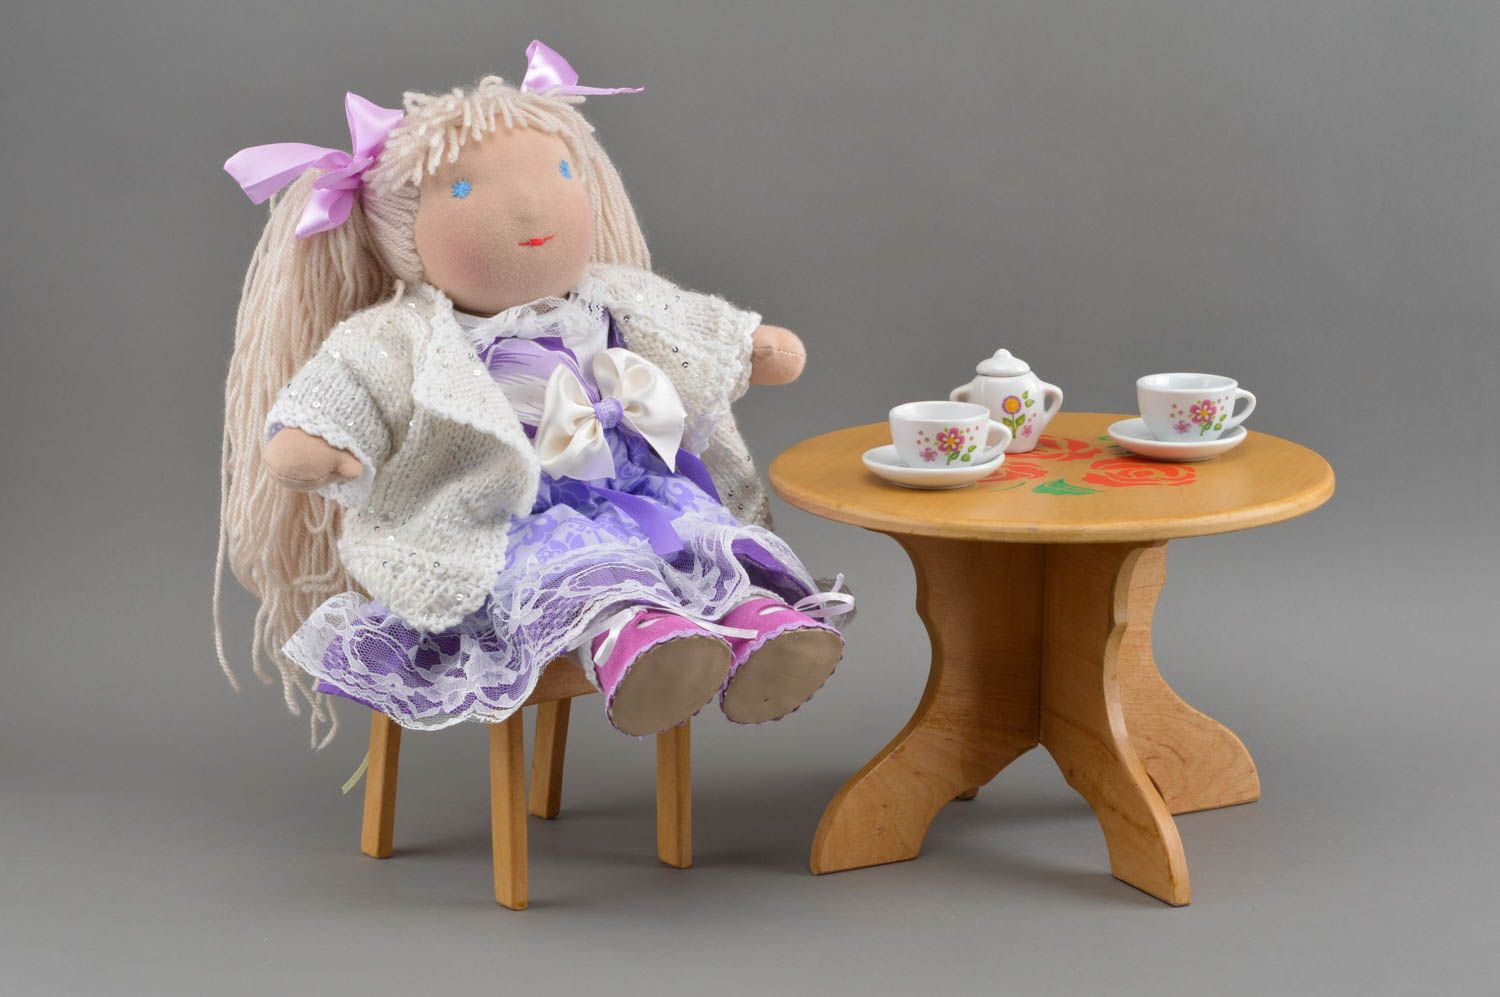 Handmade soft doll nursery decor ideas fabric stuffed toy for children photo 1